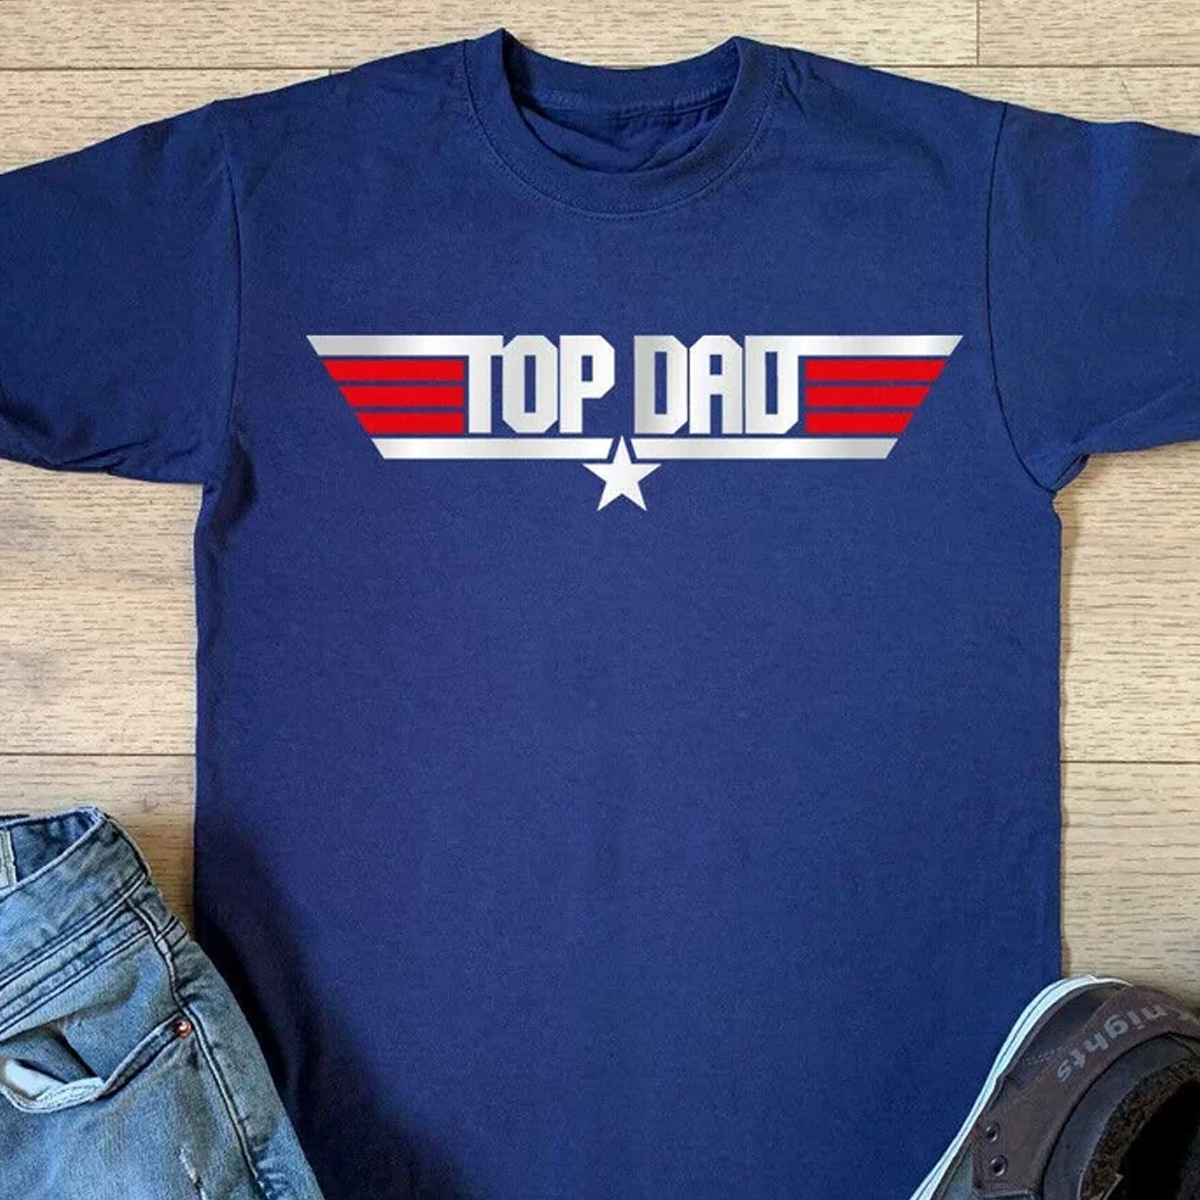 TOP DAD - Mens T-Shirt